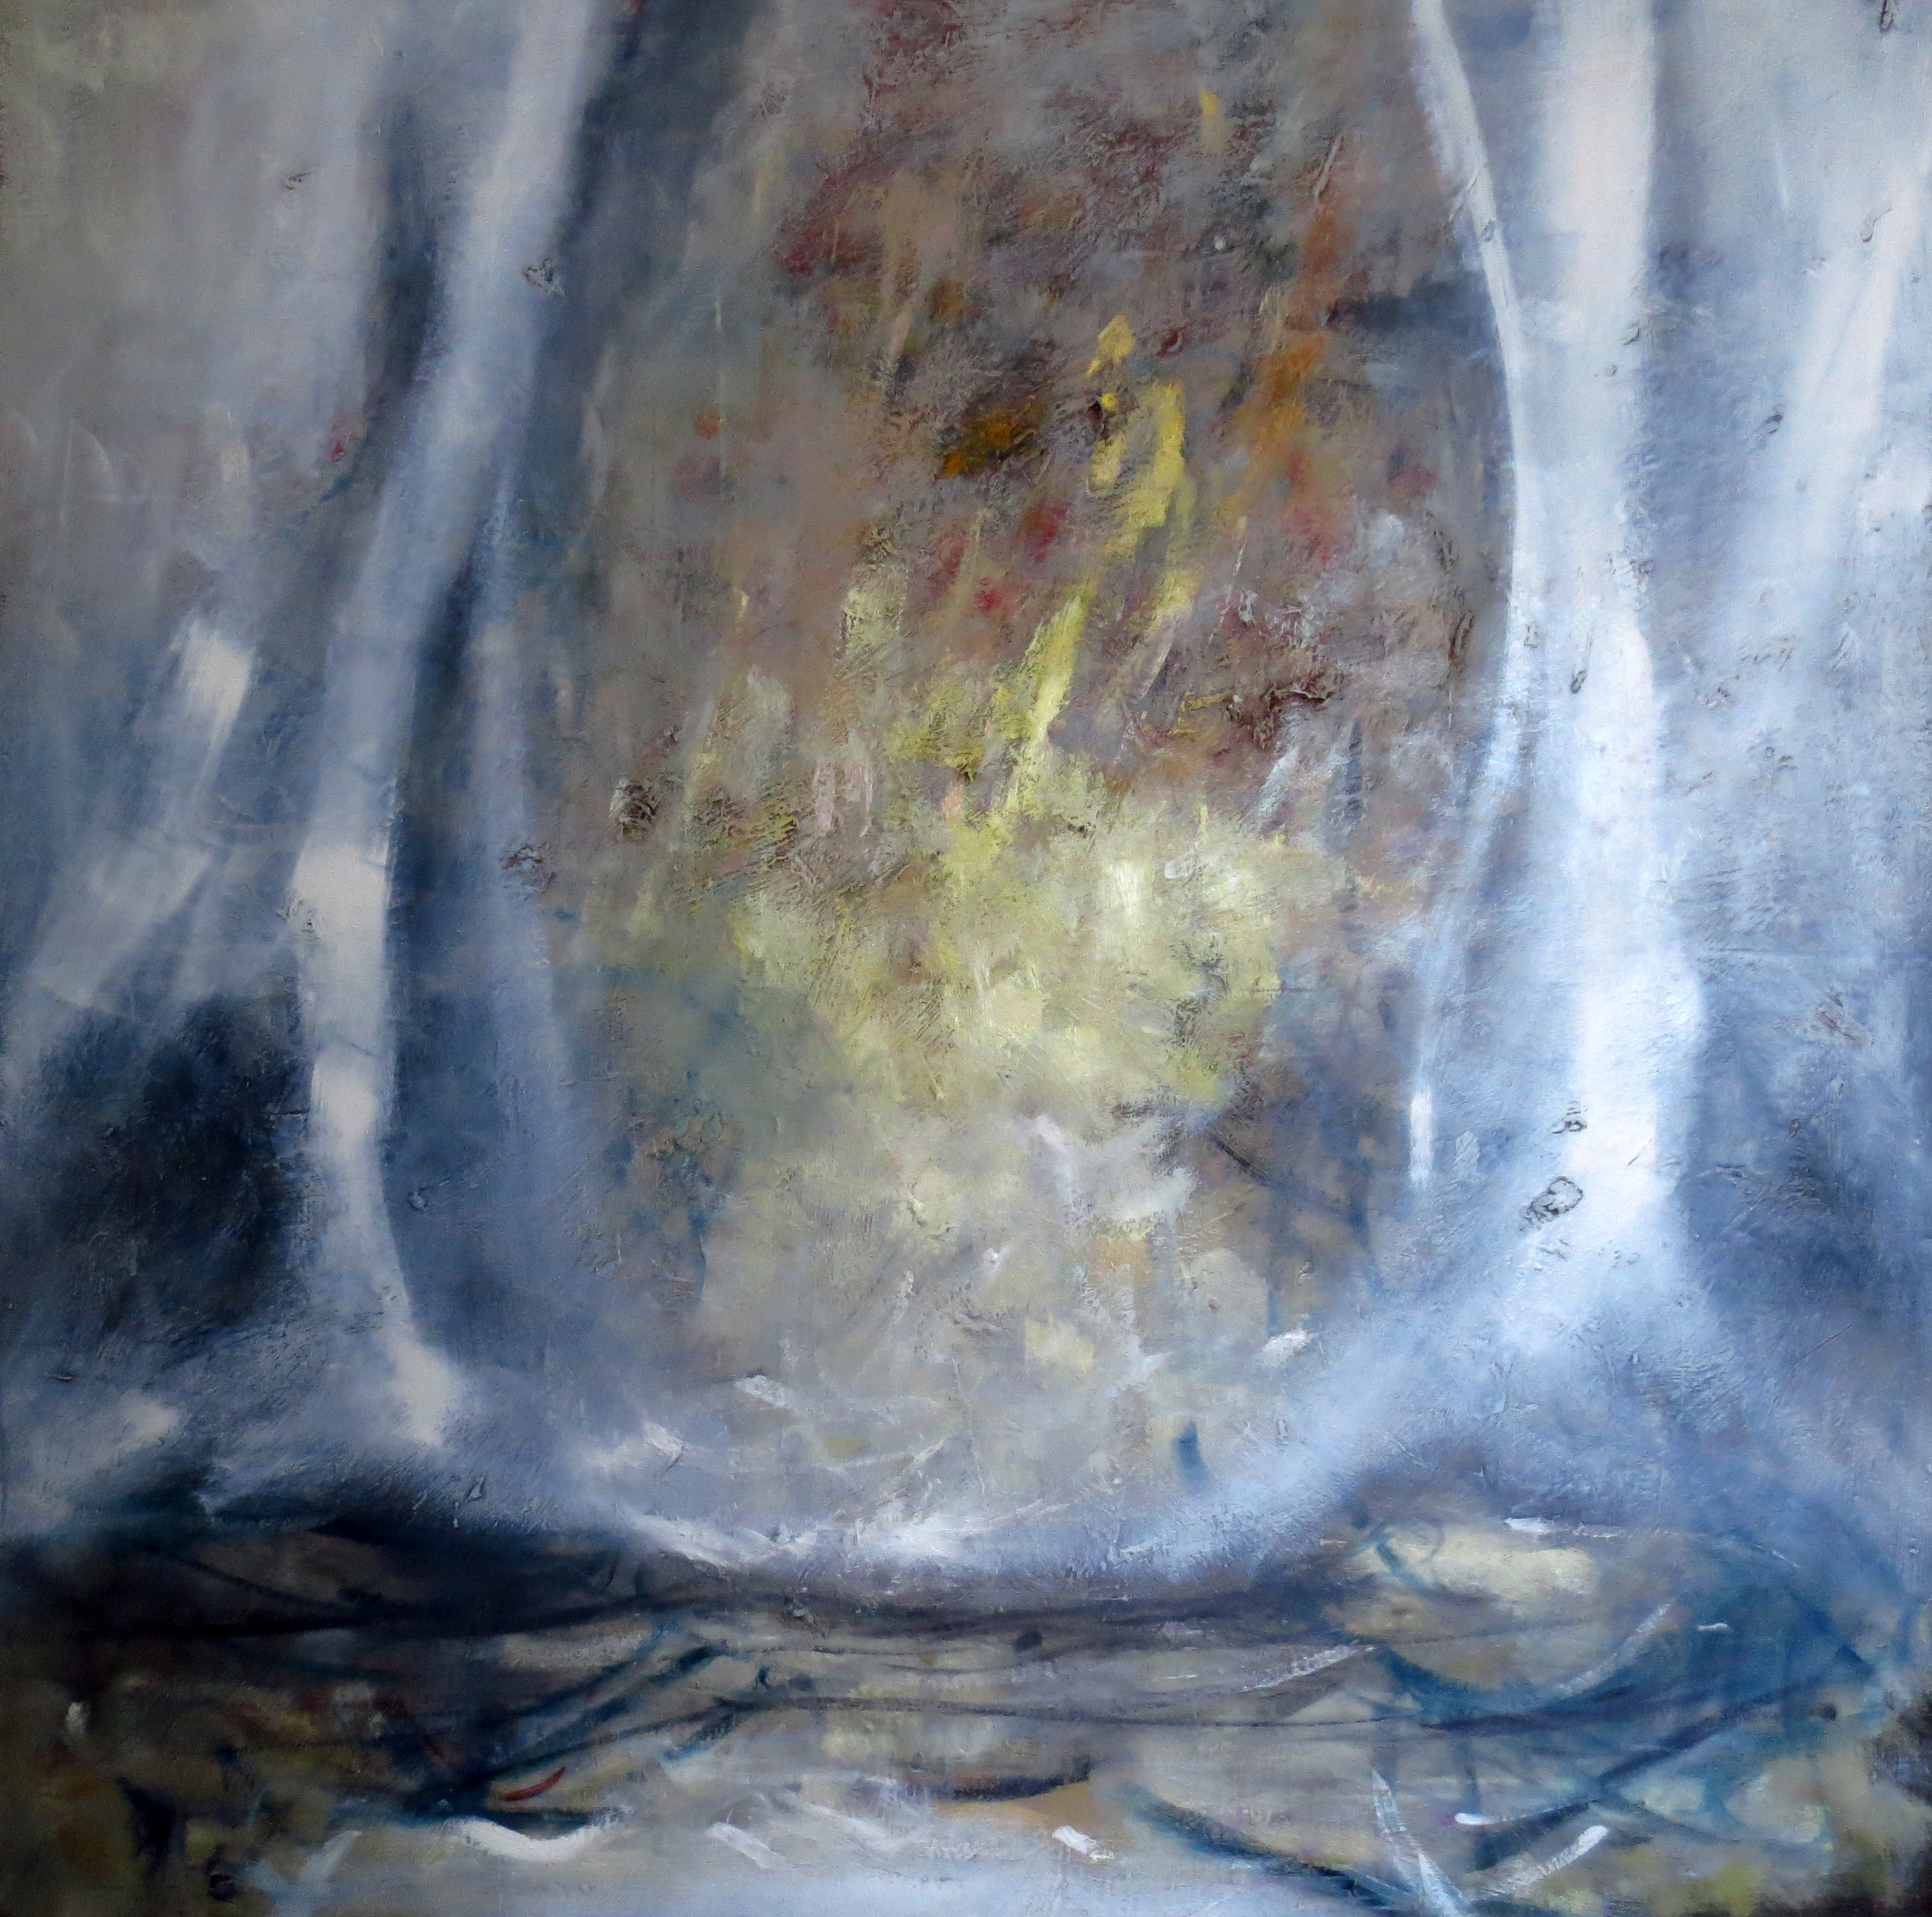 'Waterfall of Tears', oil on canvas, 180cm x 180cm, €6500 / £5700